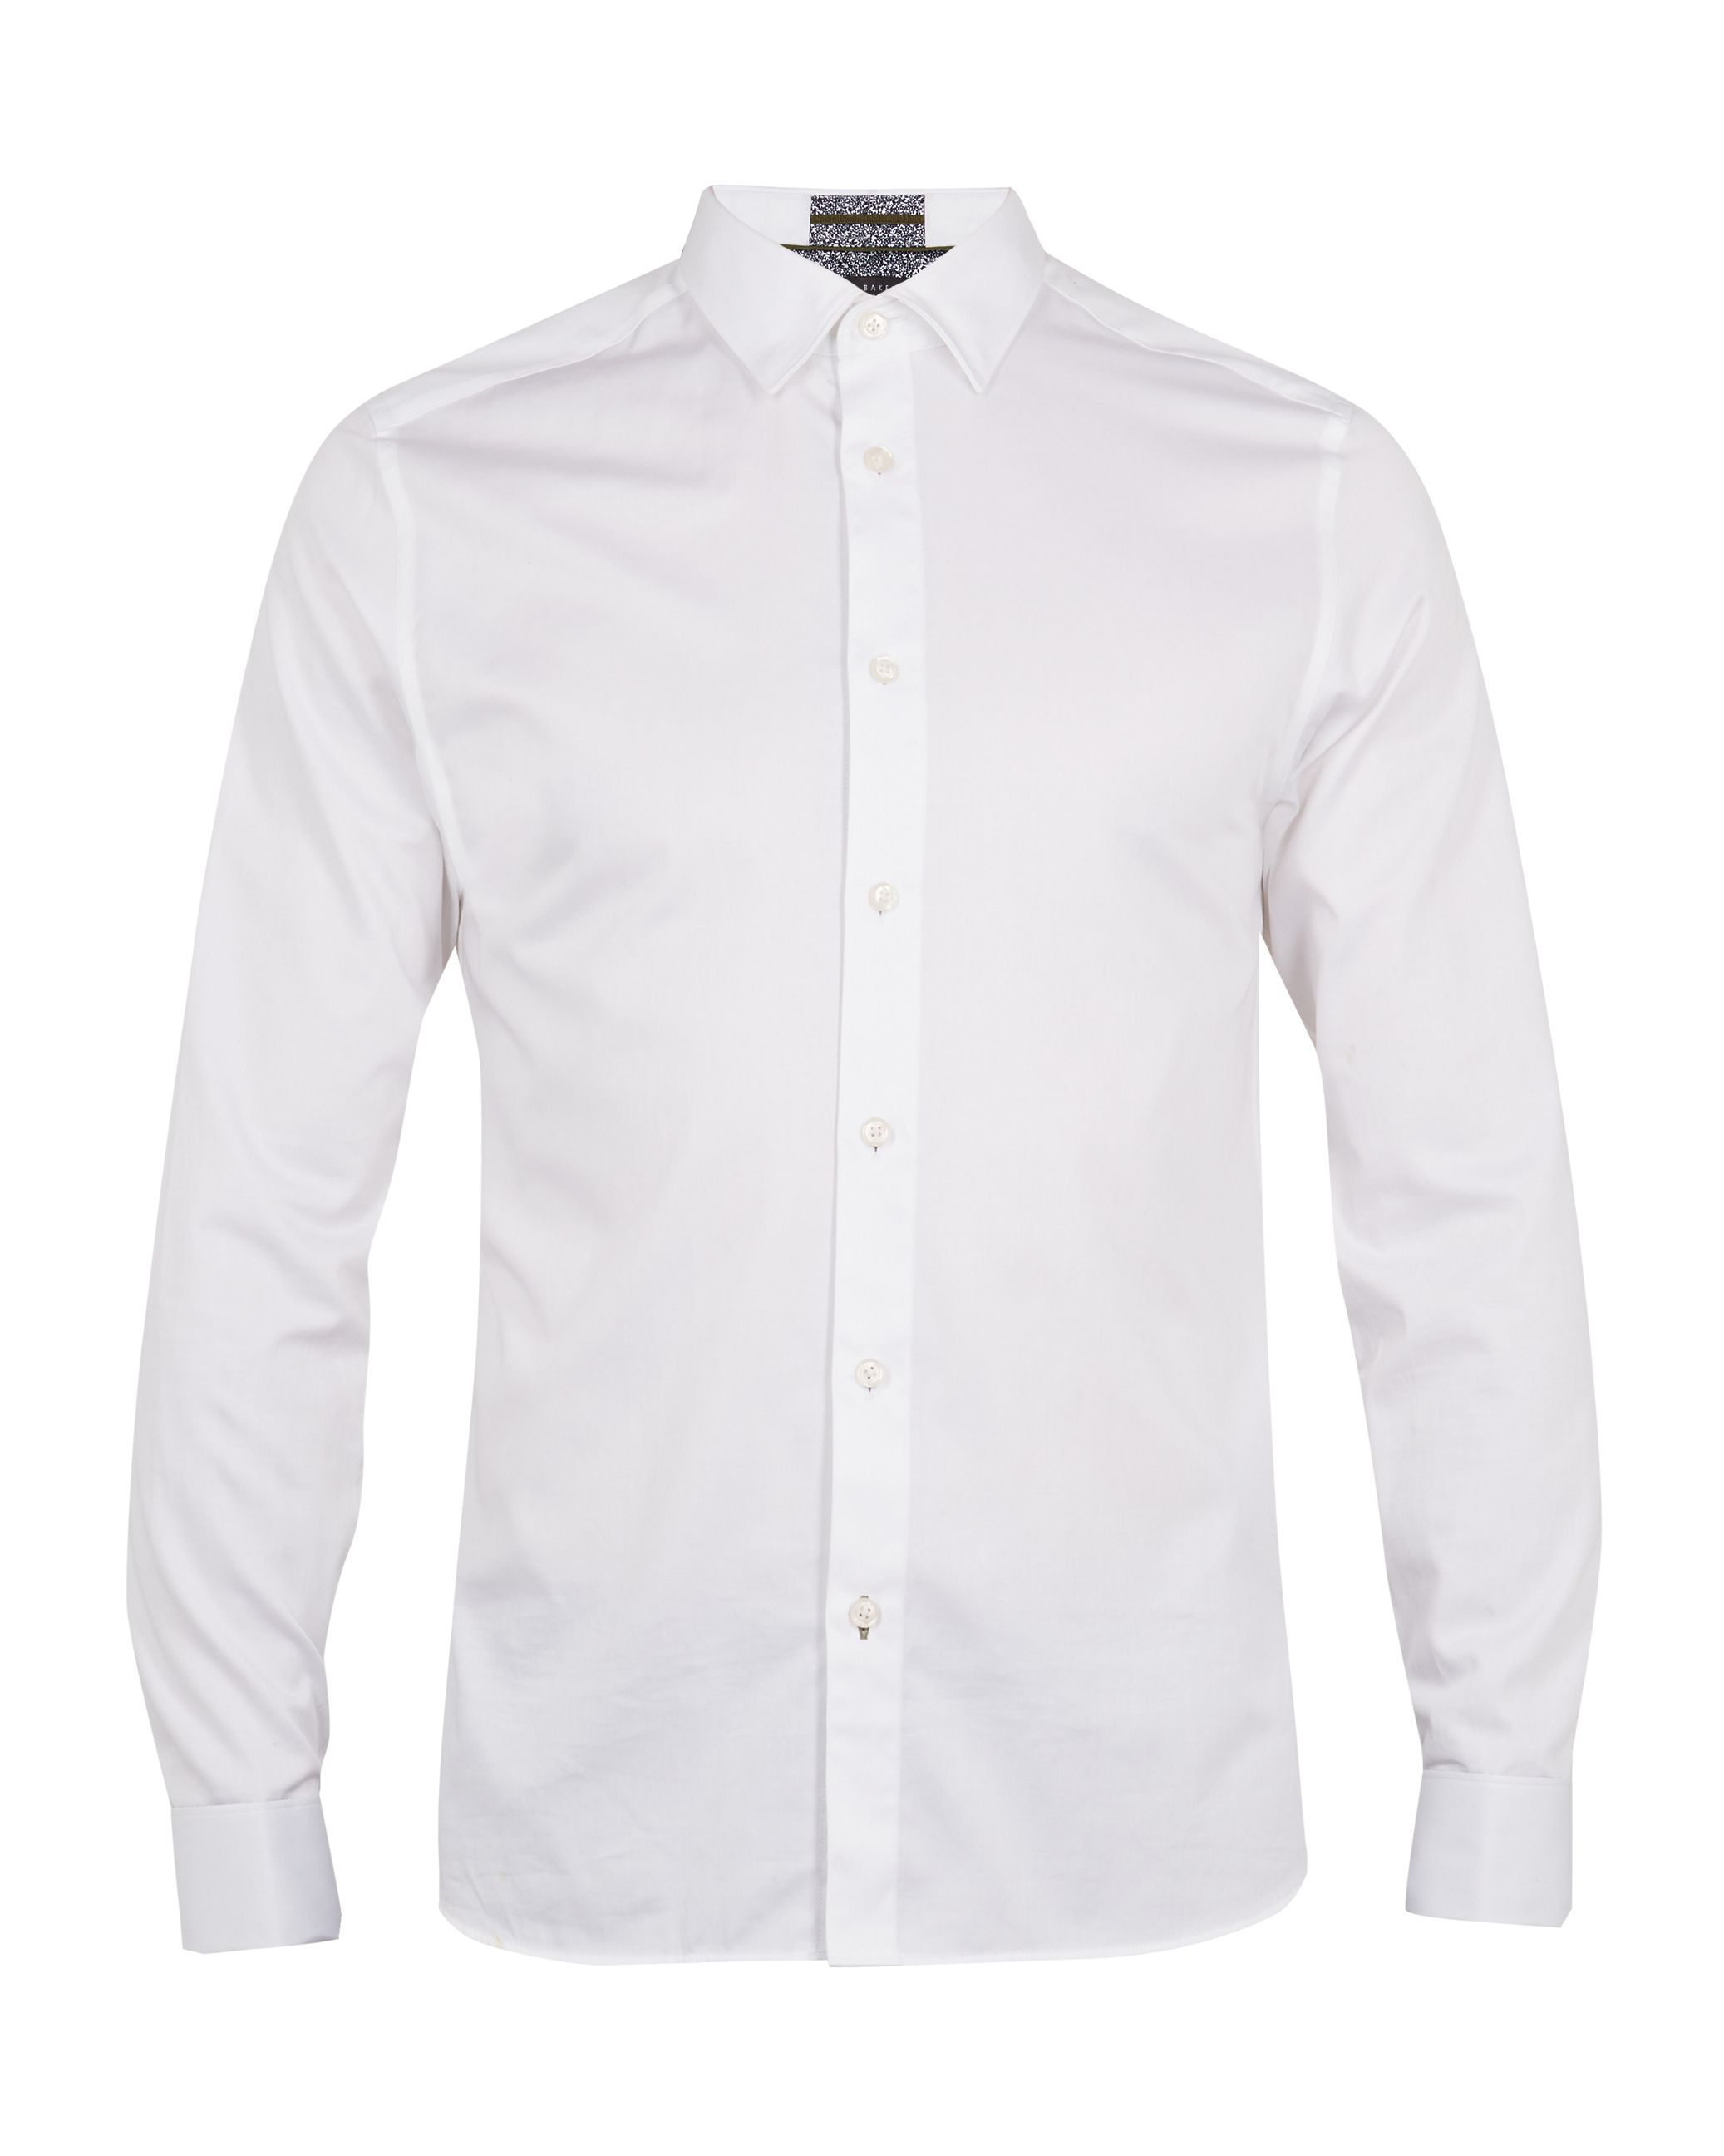 Mufasi Longsleeve Plain Phormal Shirt in White